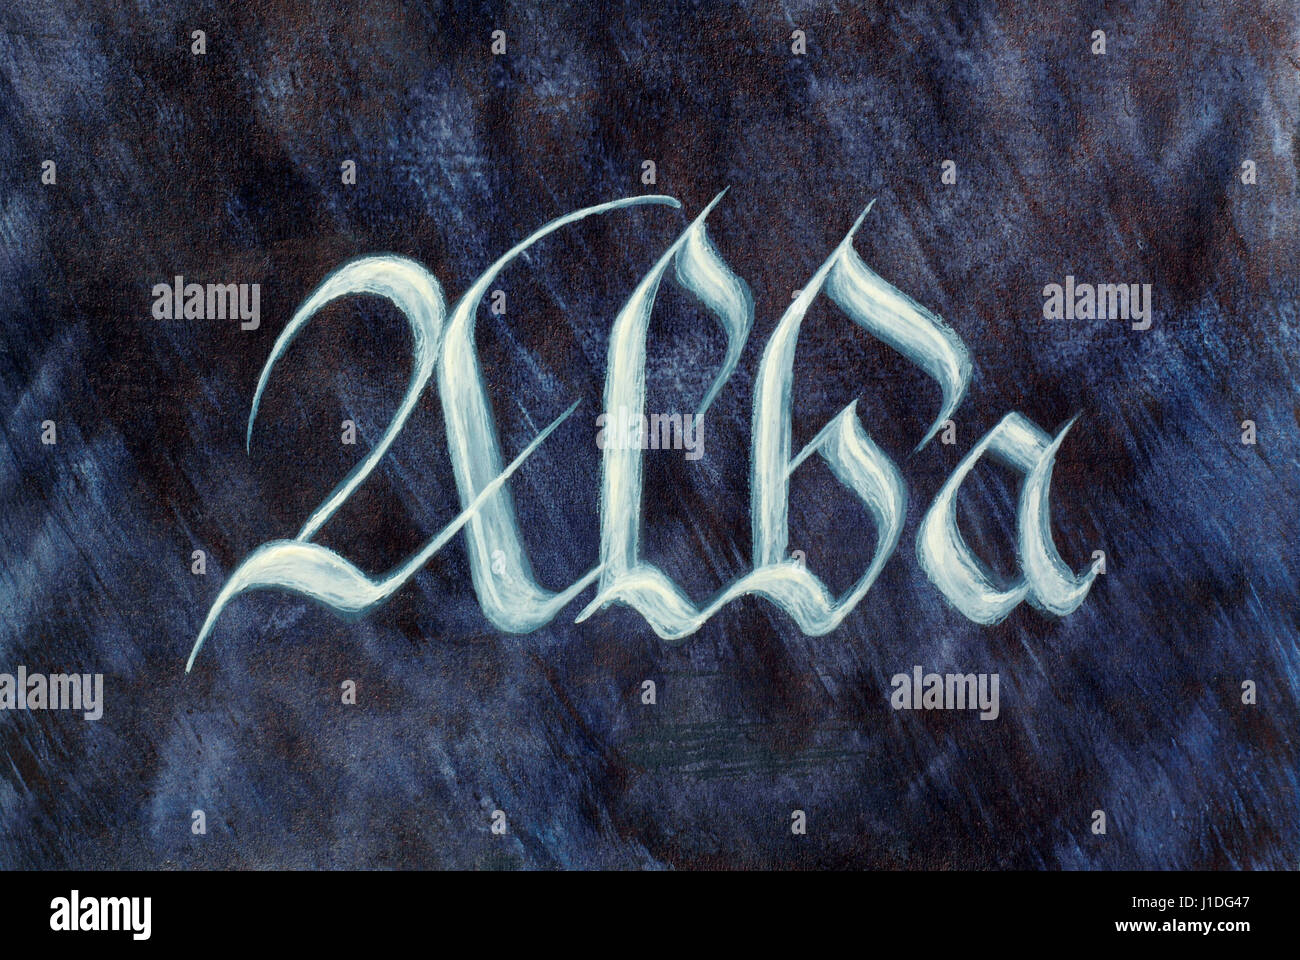 Painted country name over dark background. Scotland (Alba). Latin medieval gothic script. Scottish Gaelic language. Stock Photo